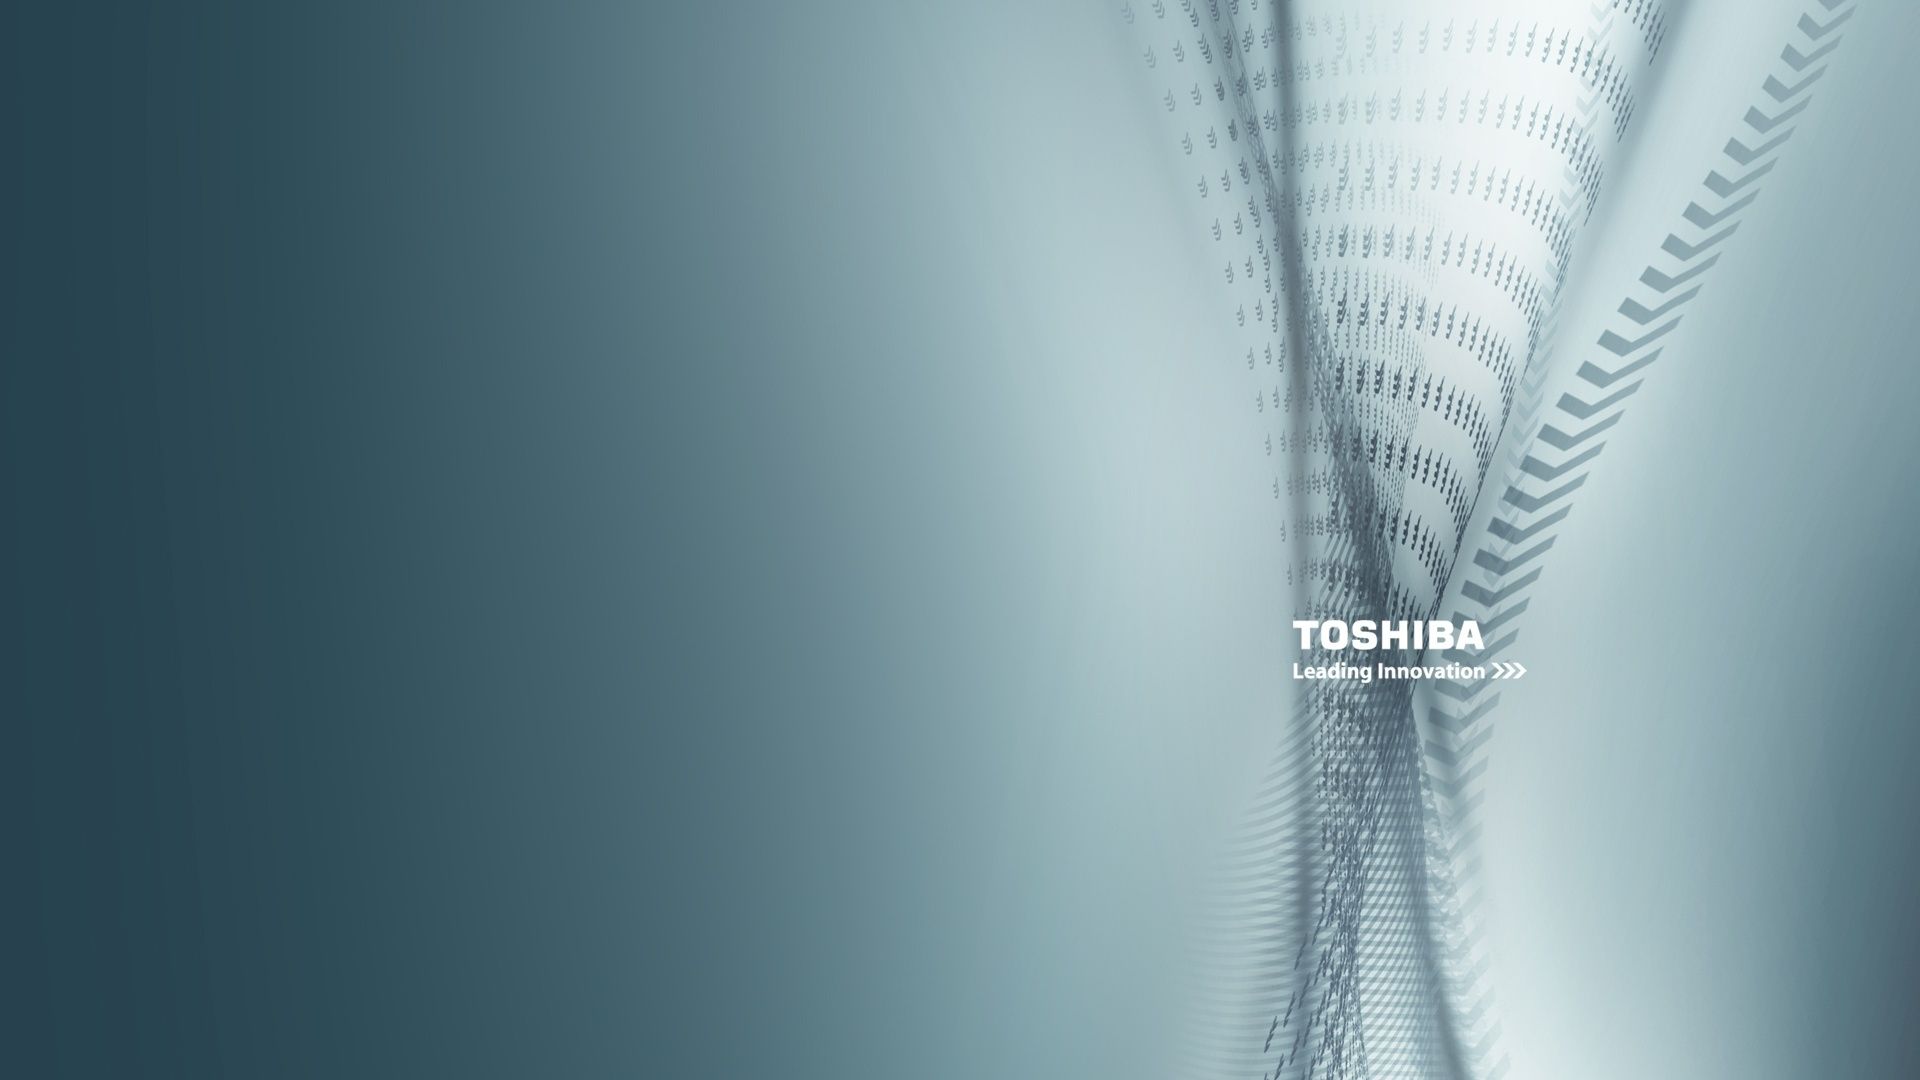 1920x1080 Toshiba Innovation Hd Wallpaper